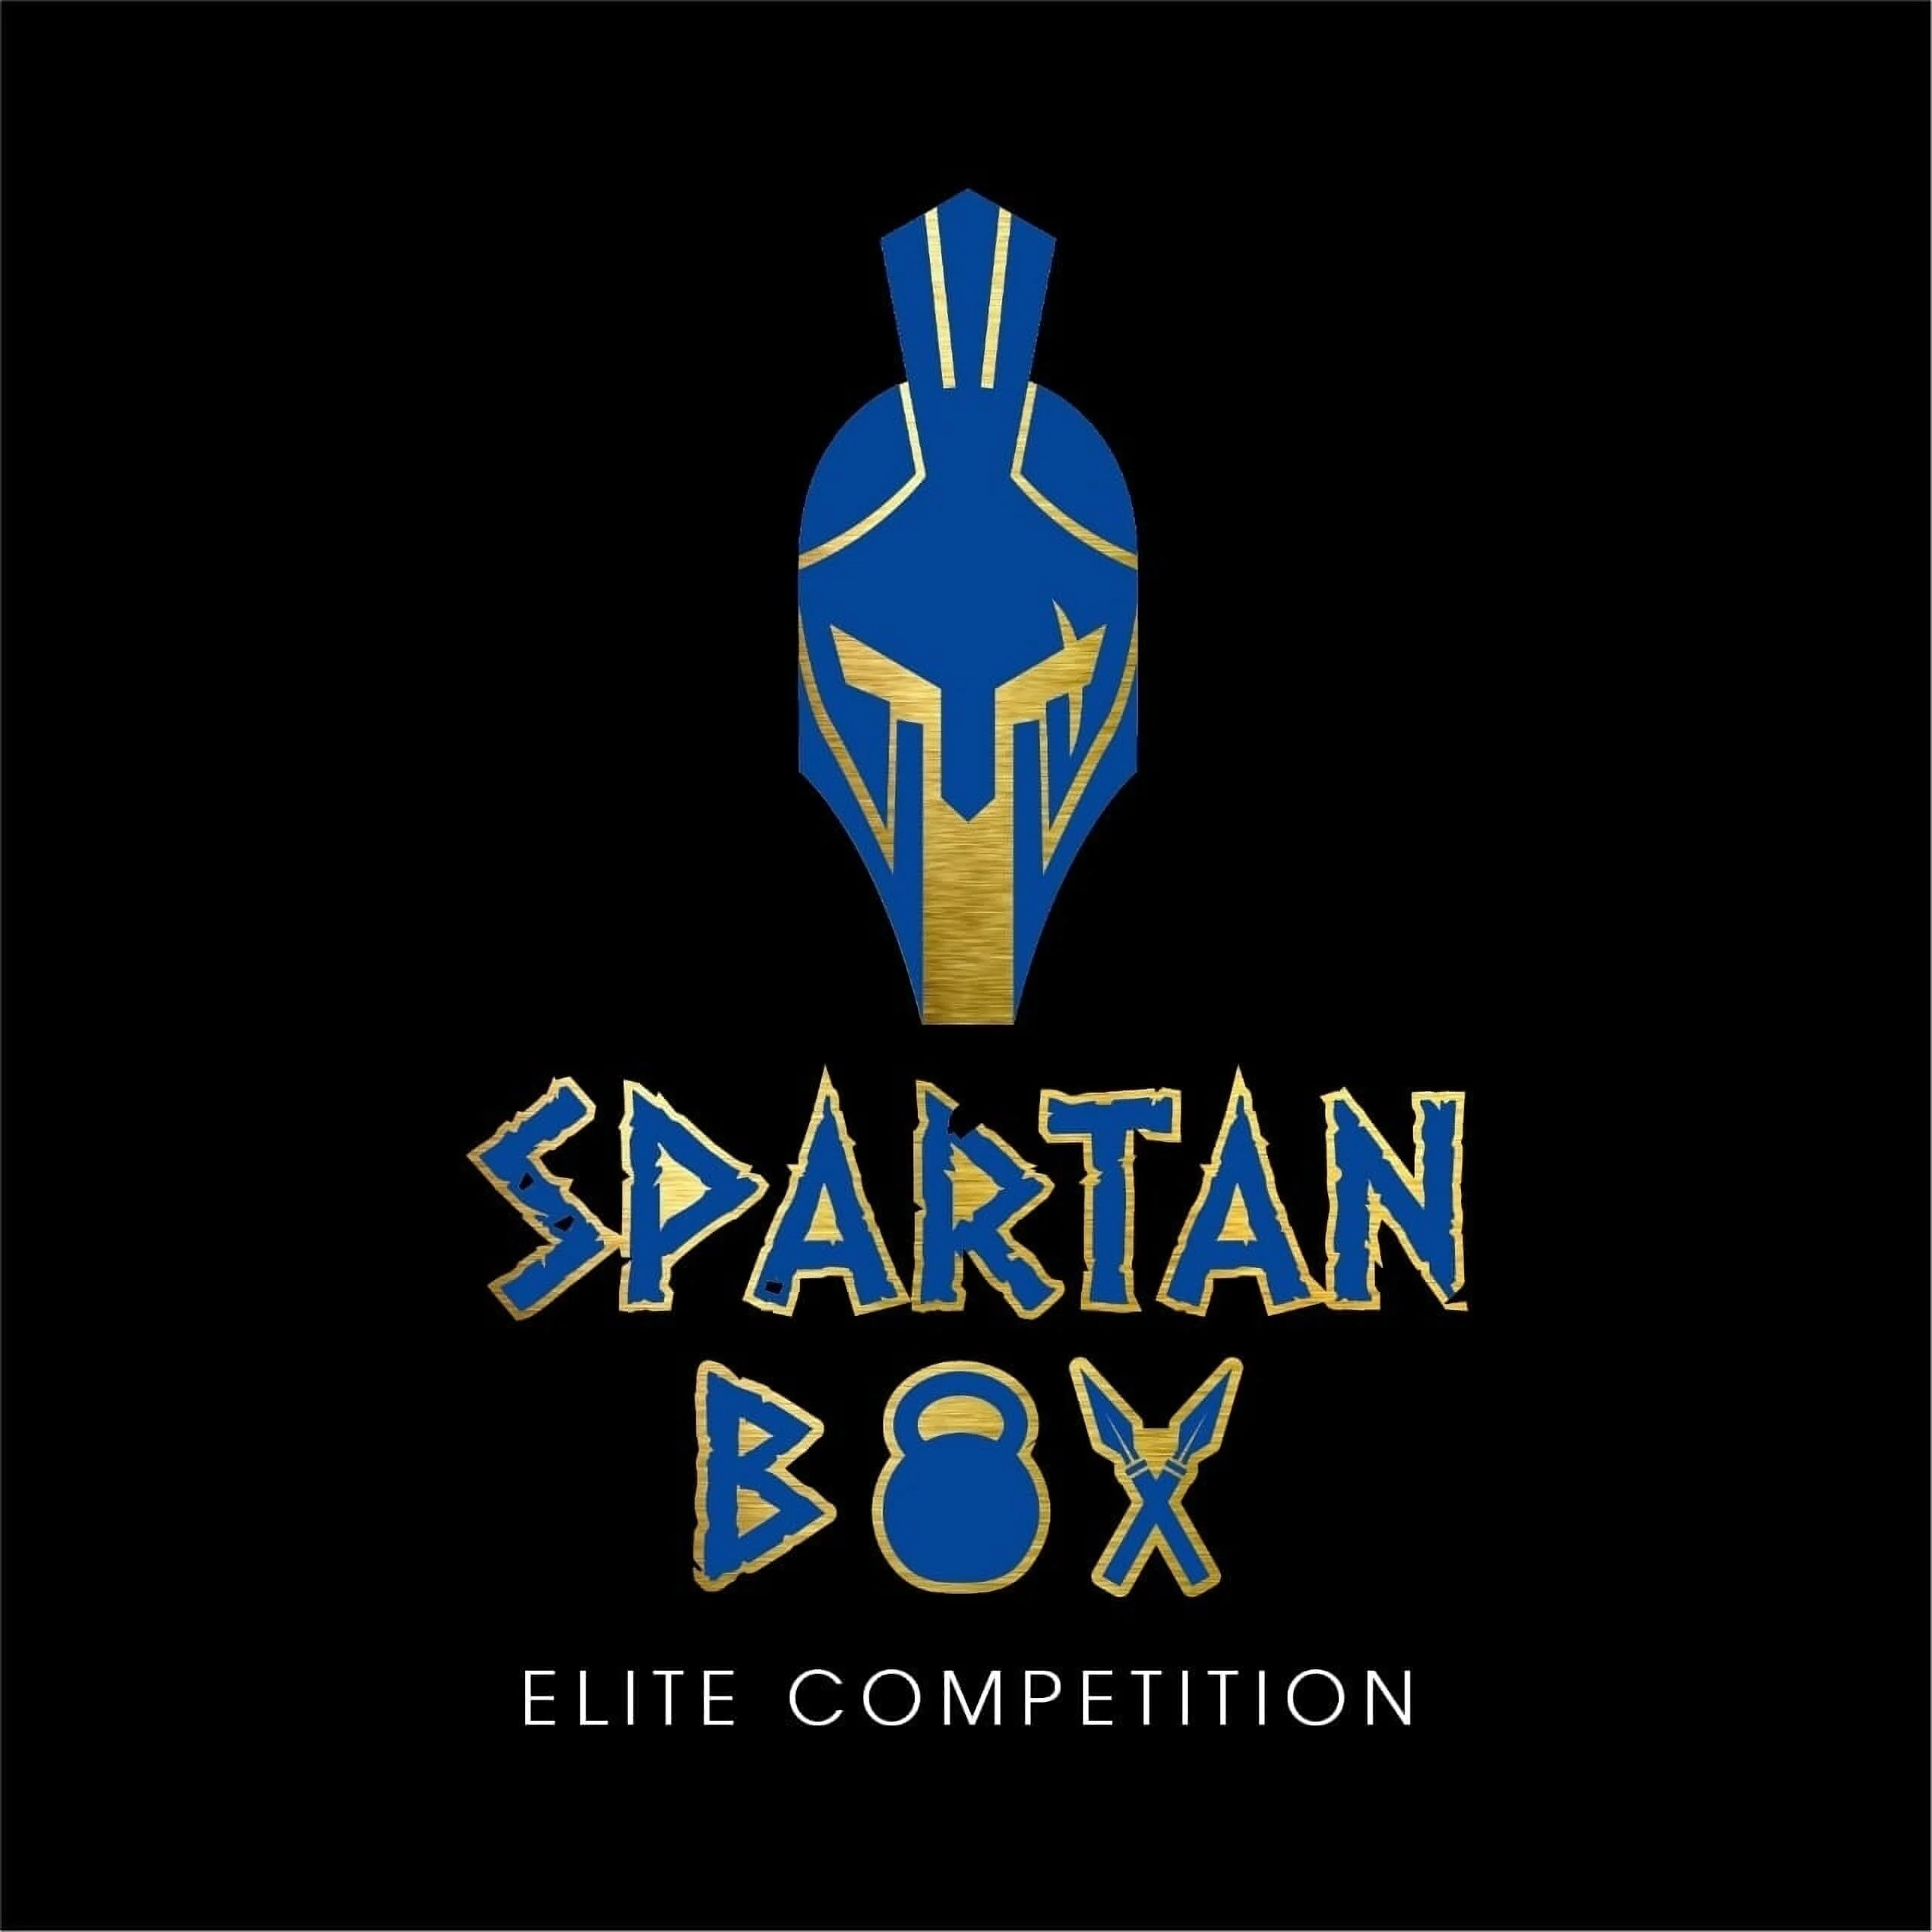 Crossfit-spartan-box-9057